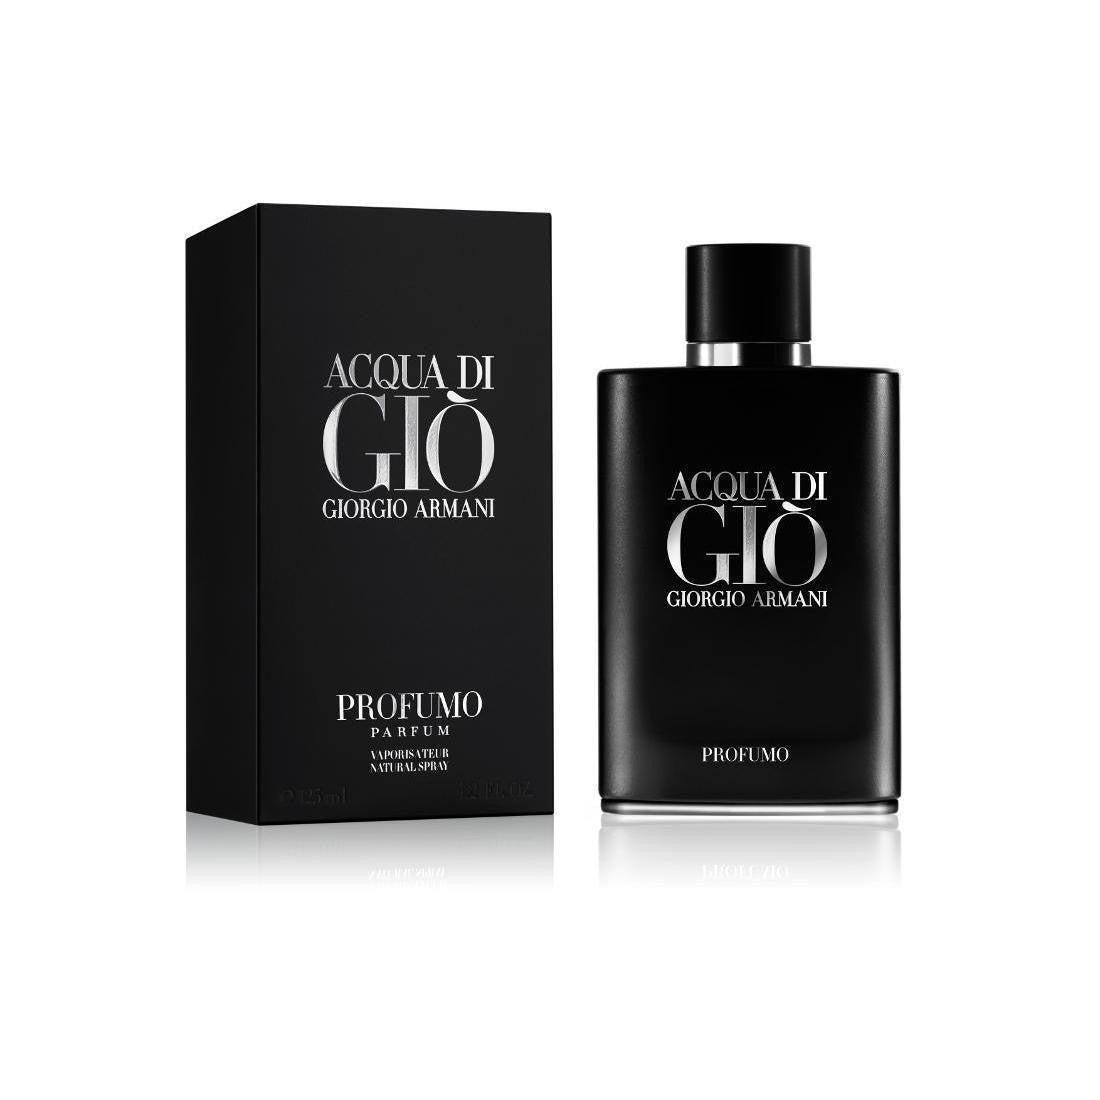 Giorgio Armani Acqua Di Gio Profumo Men's Eau De Parfum SprayMen's FragranceGIORGIO ARMANISize: 4.2 oz